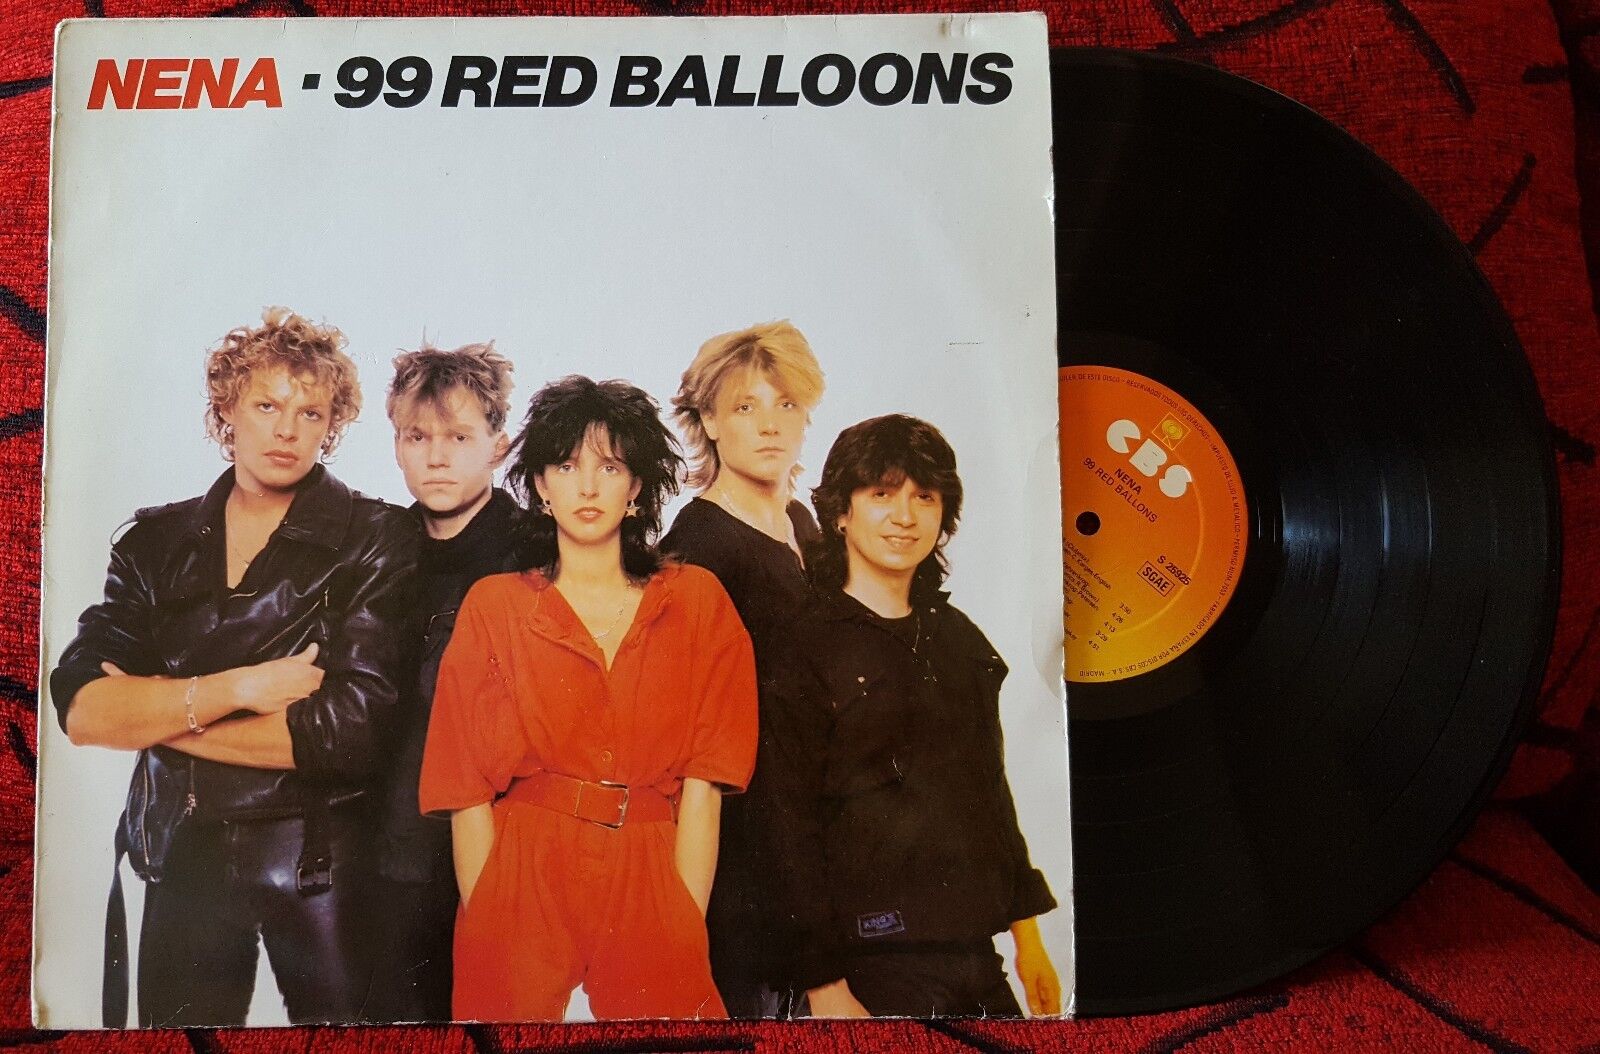 Dochter Verrassend genoeg Afkorten NENA *** 99 Red Balloons *** VERY RARE COVER Spain LP 1984 *** | eBay